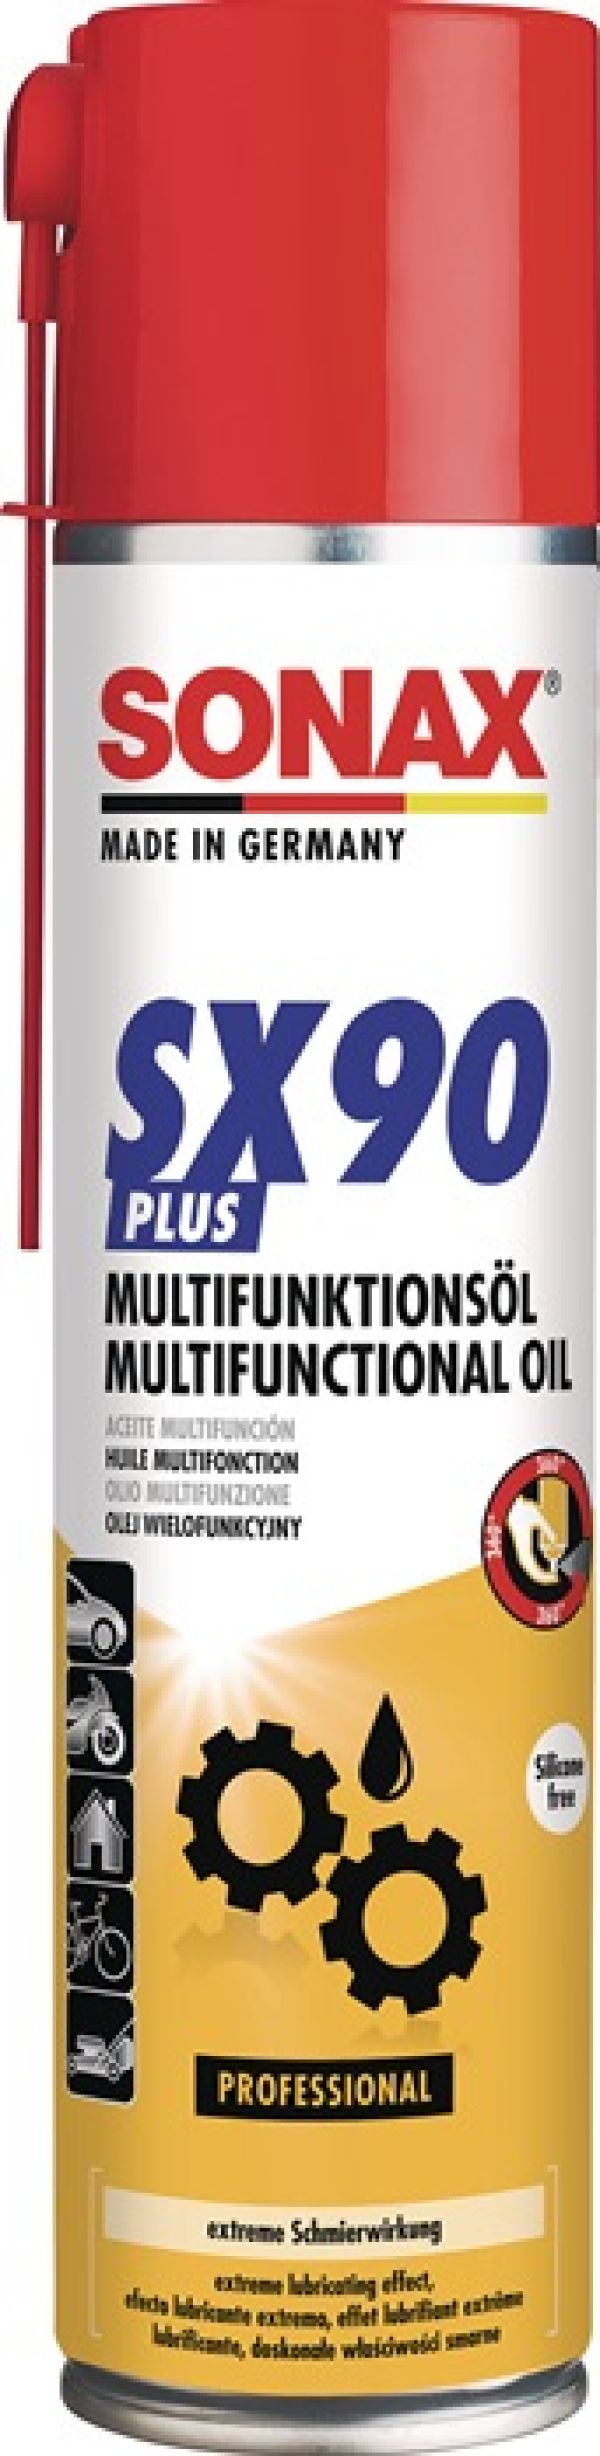 Multifunktionsspray SX90 PLUS SONAX